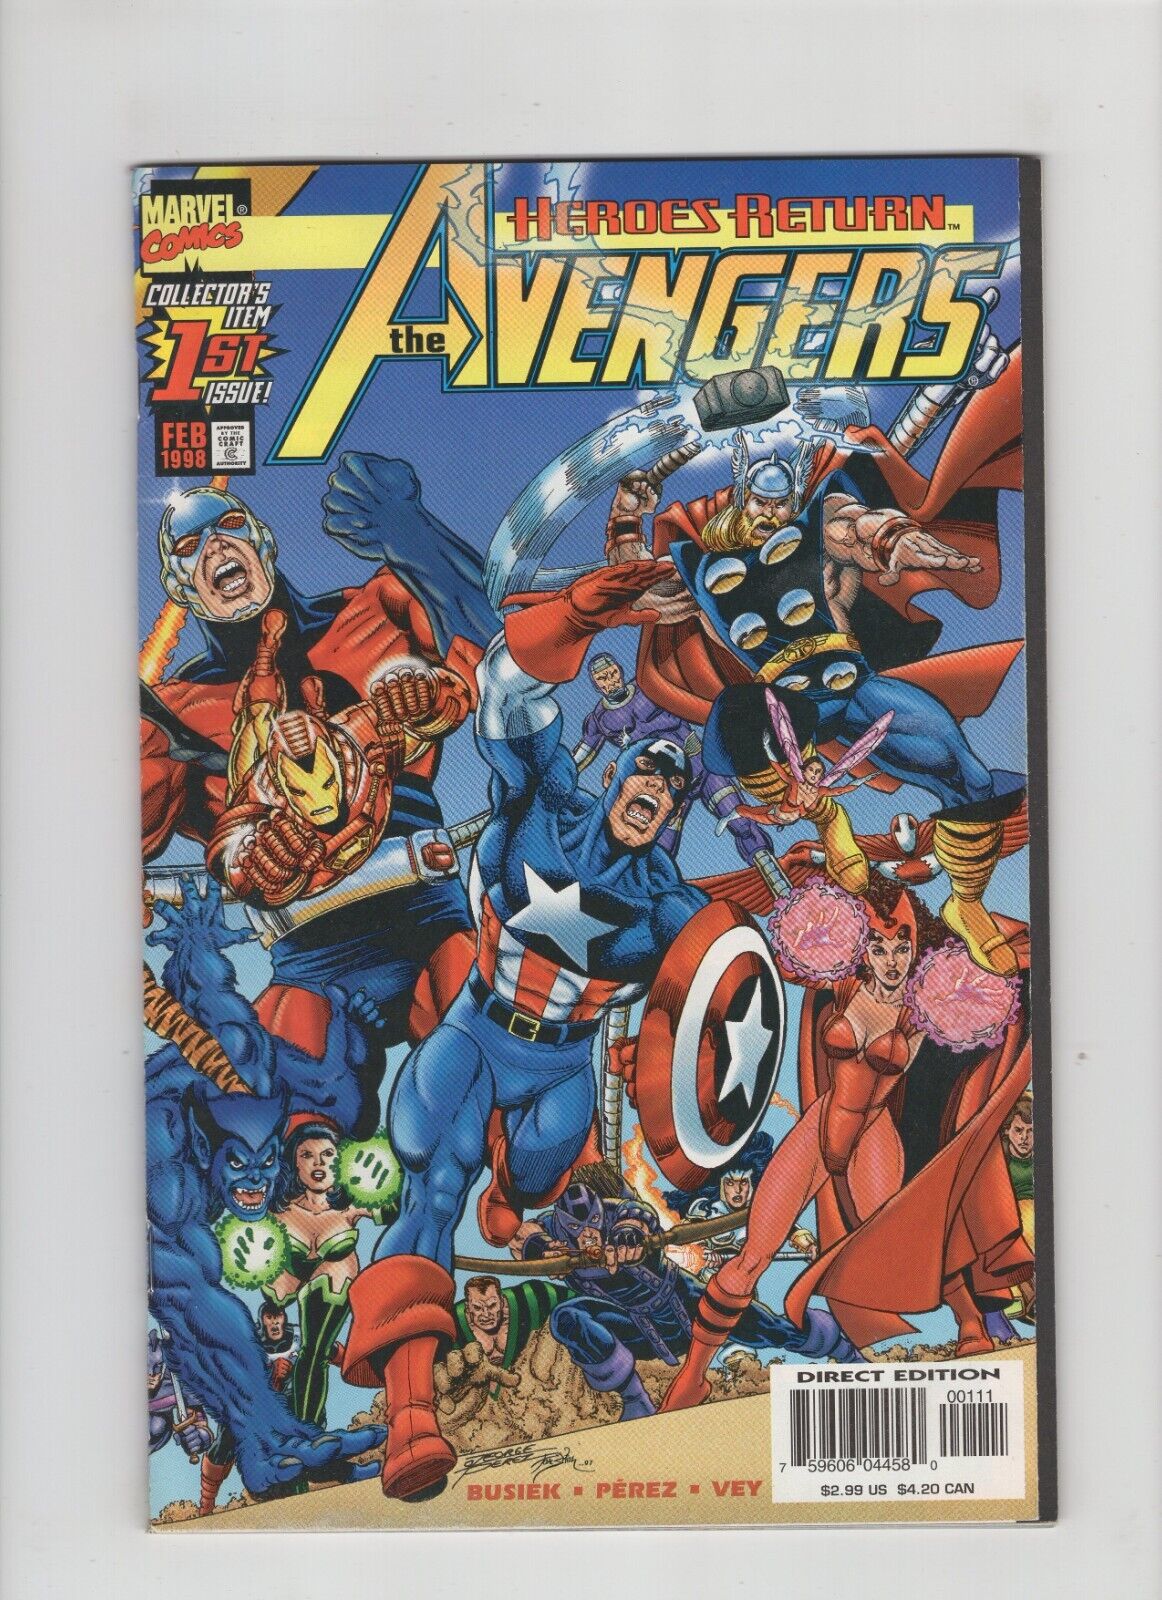 The Avengers #1 (1998, Marvel Comics)